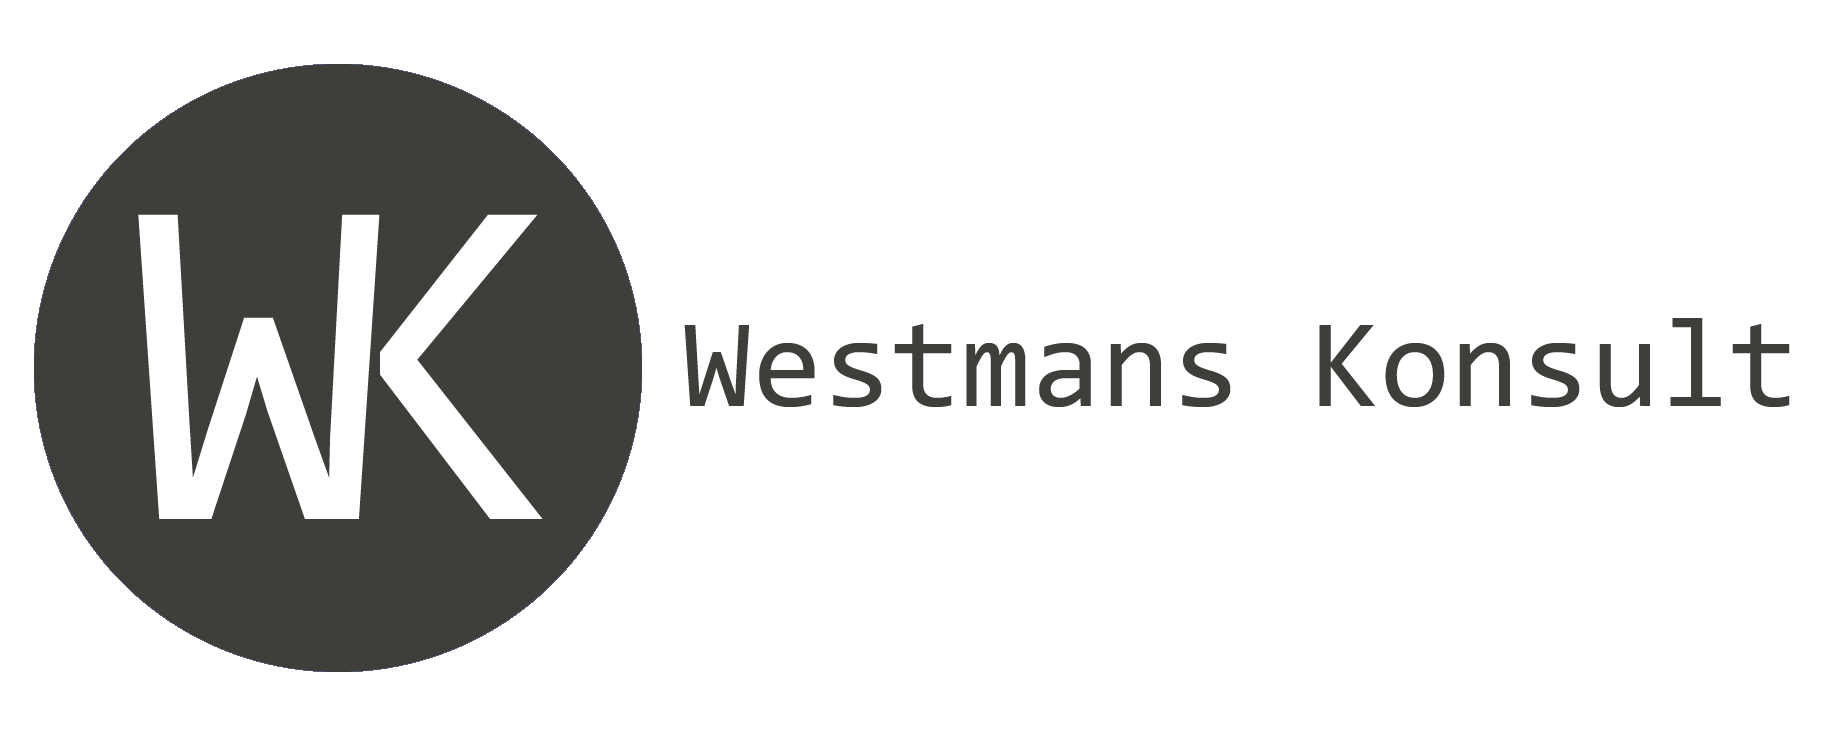 Westmanskonsult